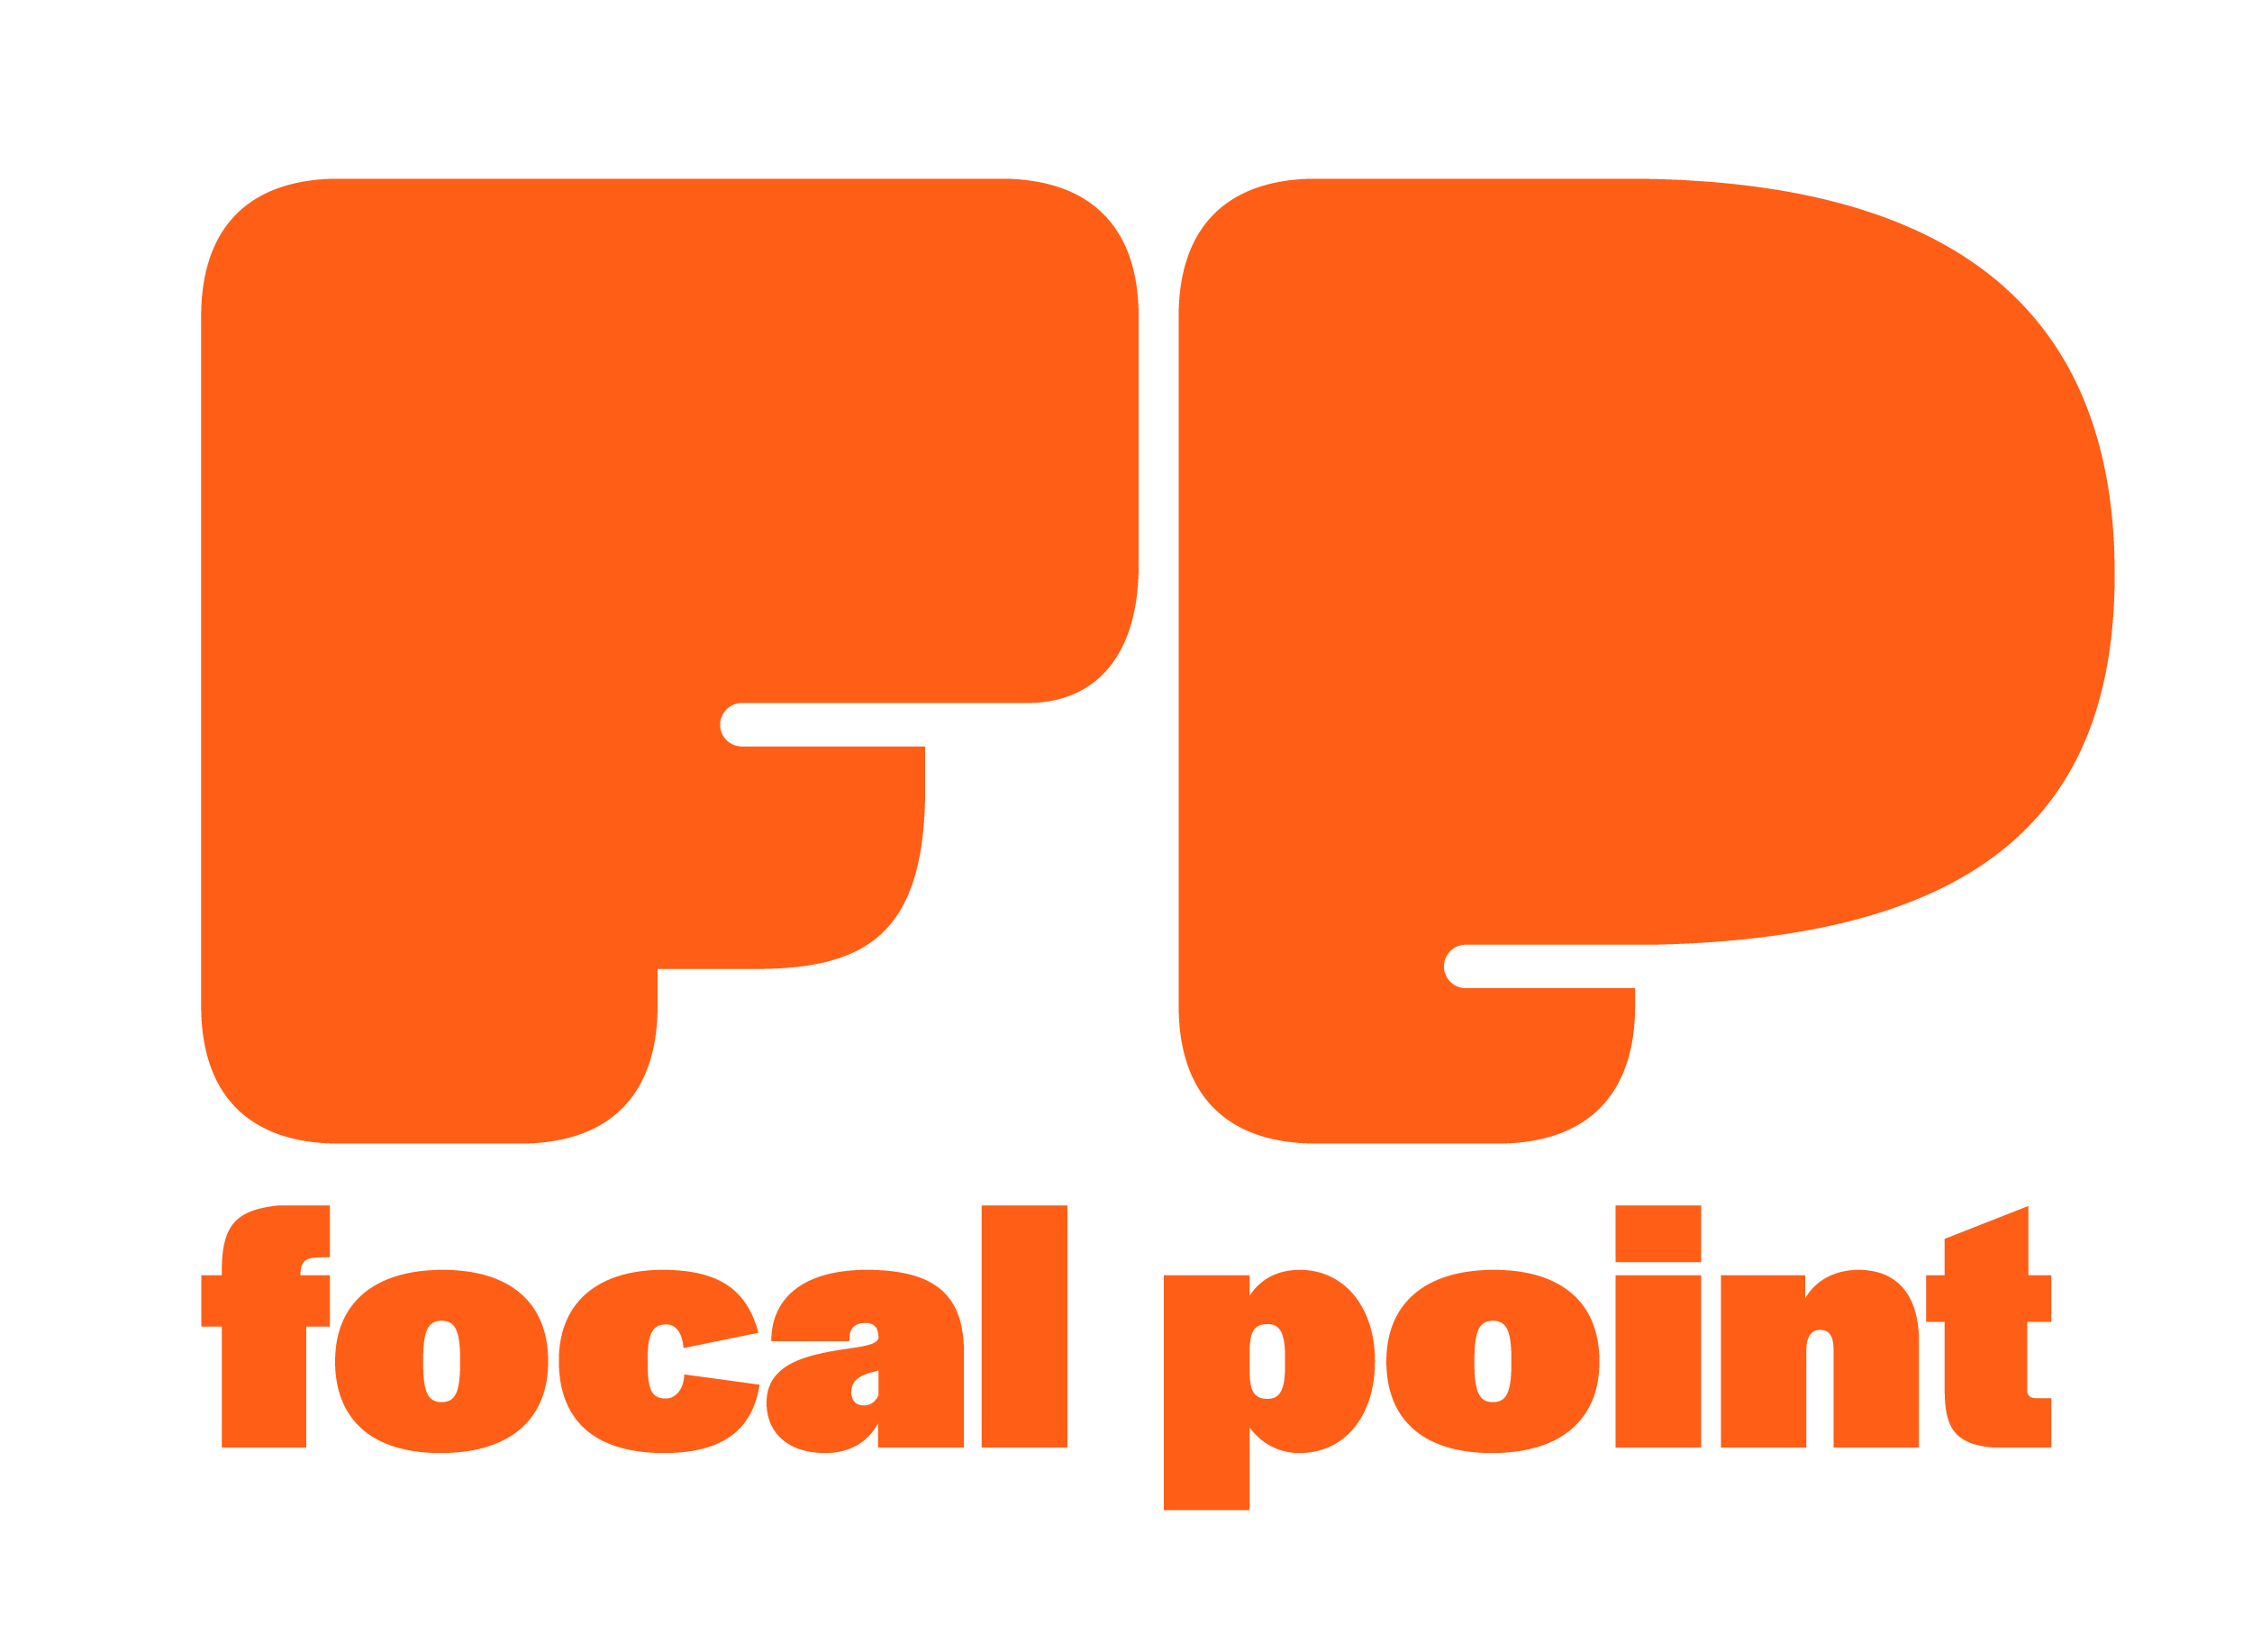 Focal Point logo